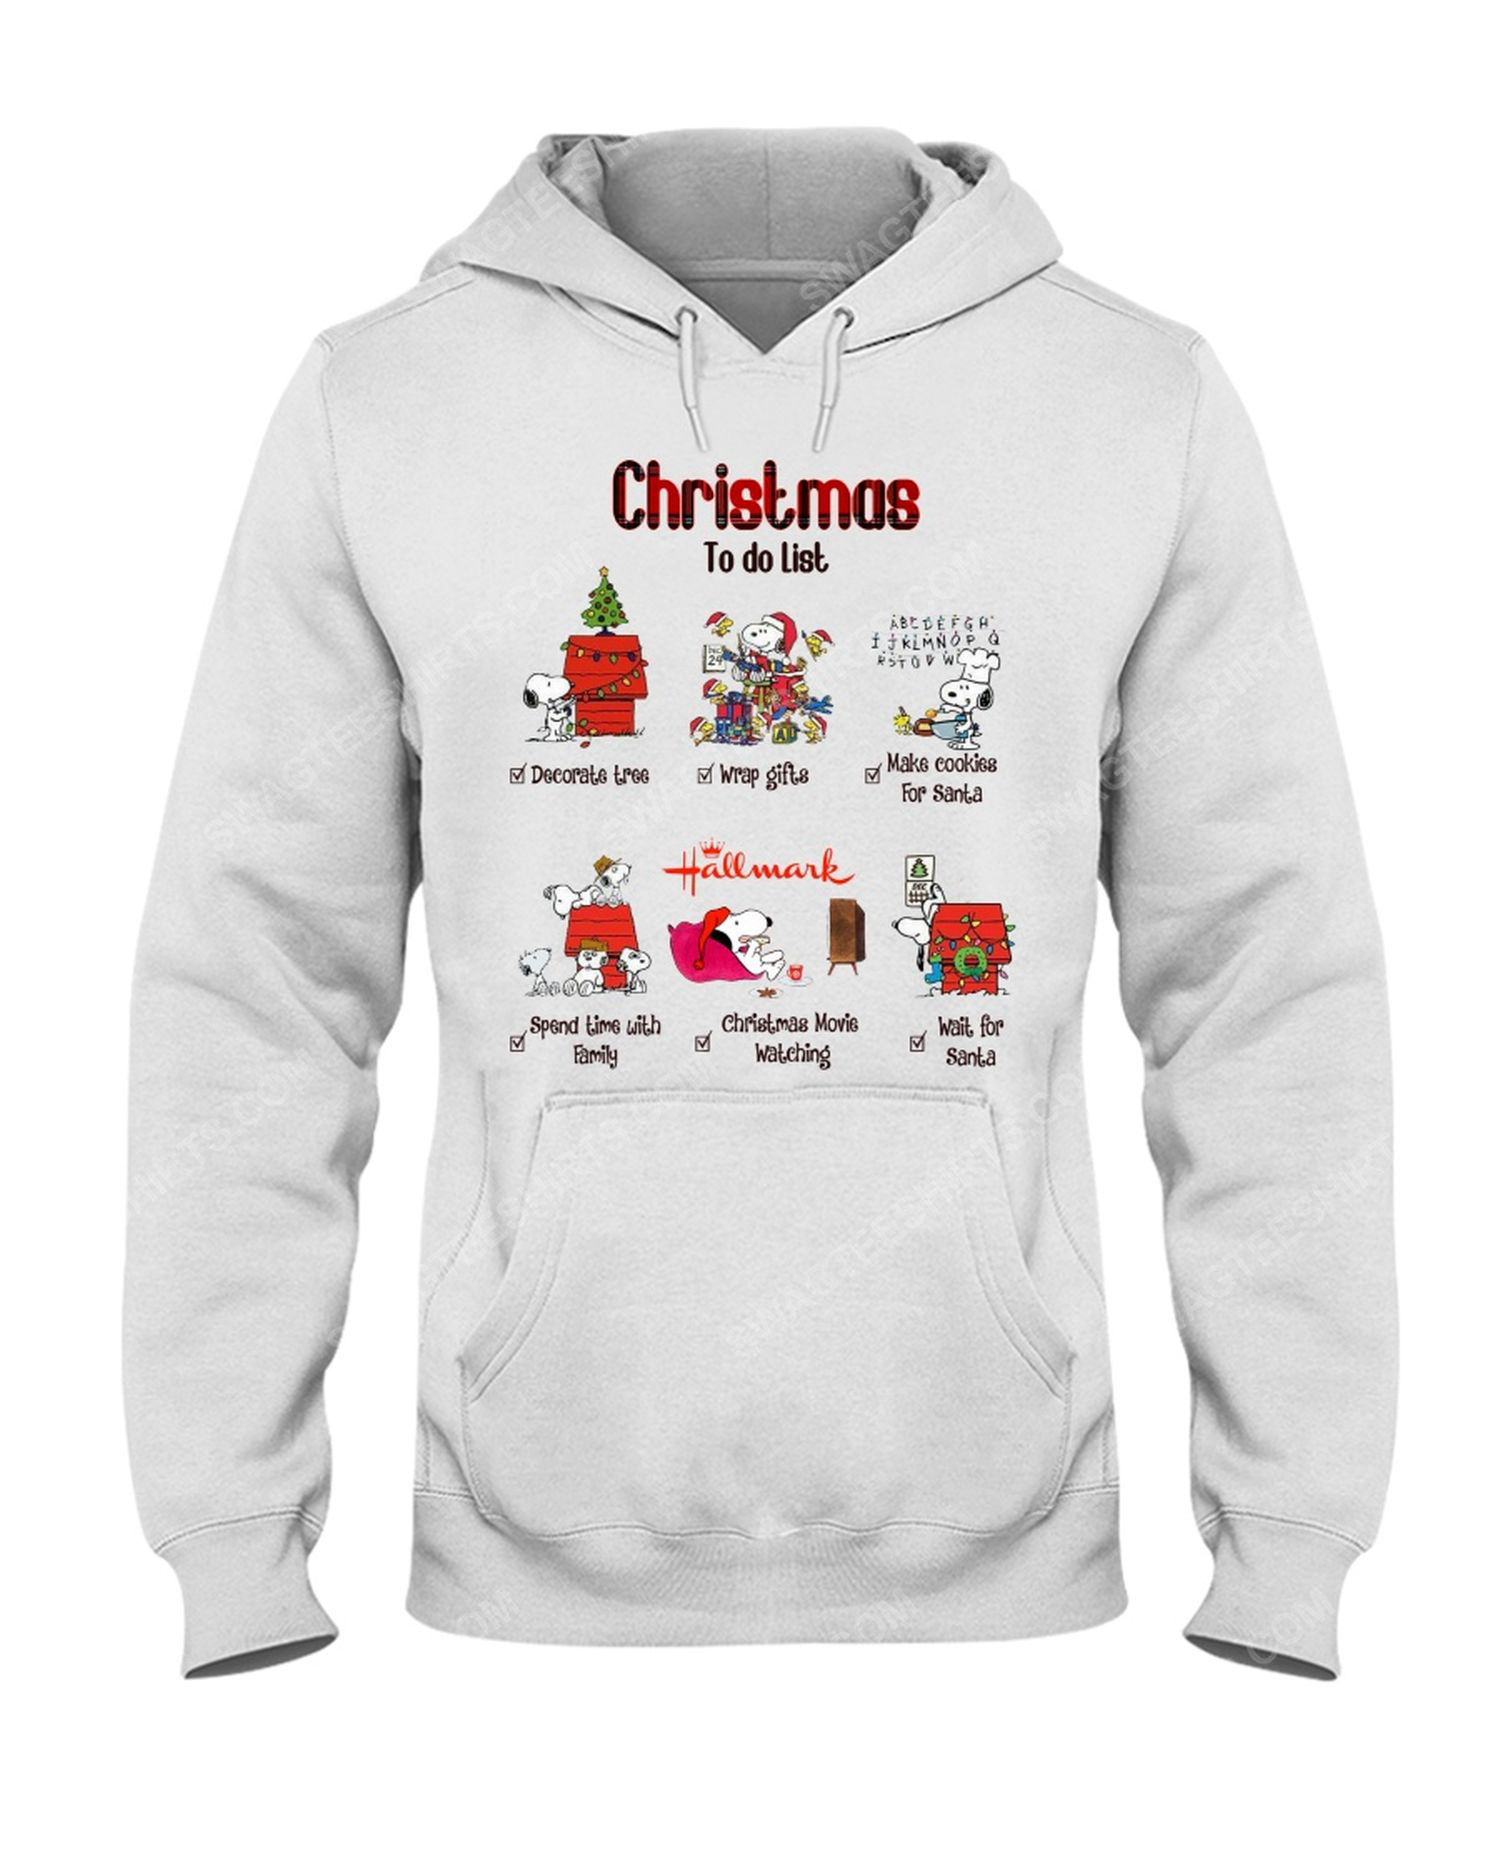 The snoopy christmas to do list hallmark hoodie